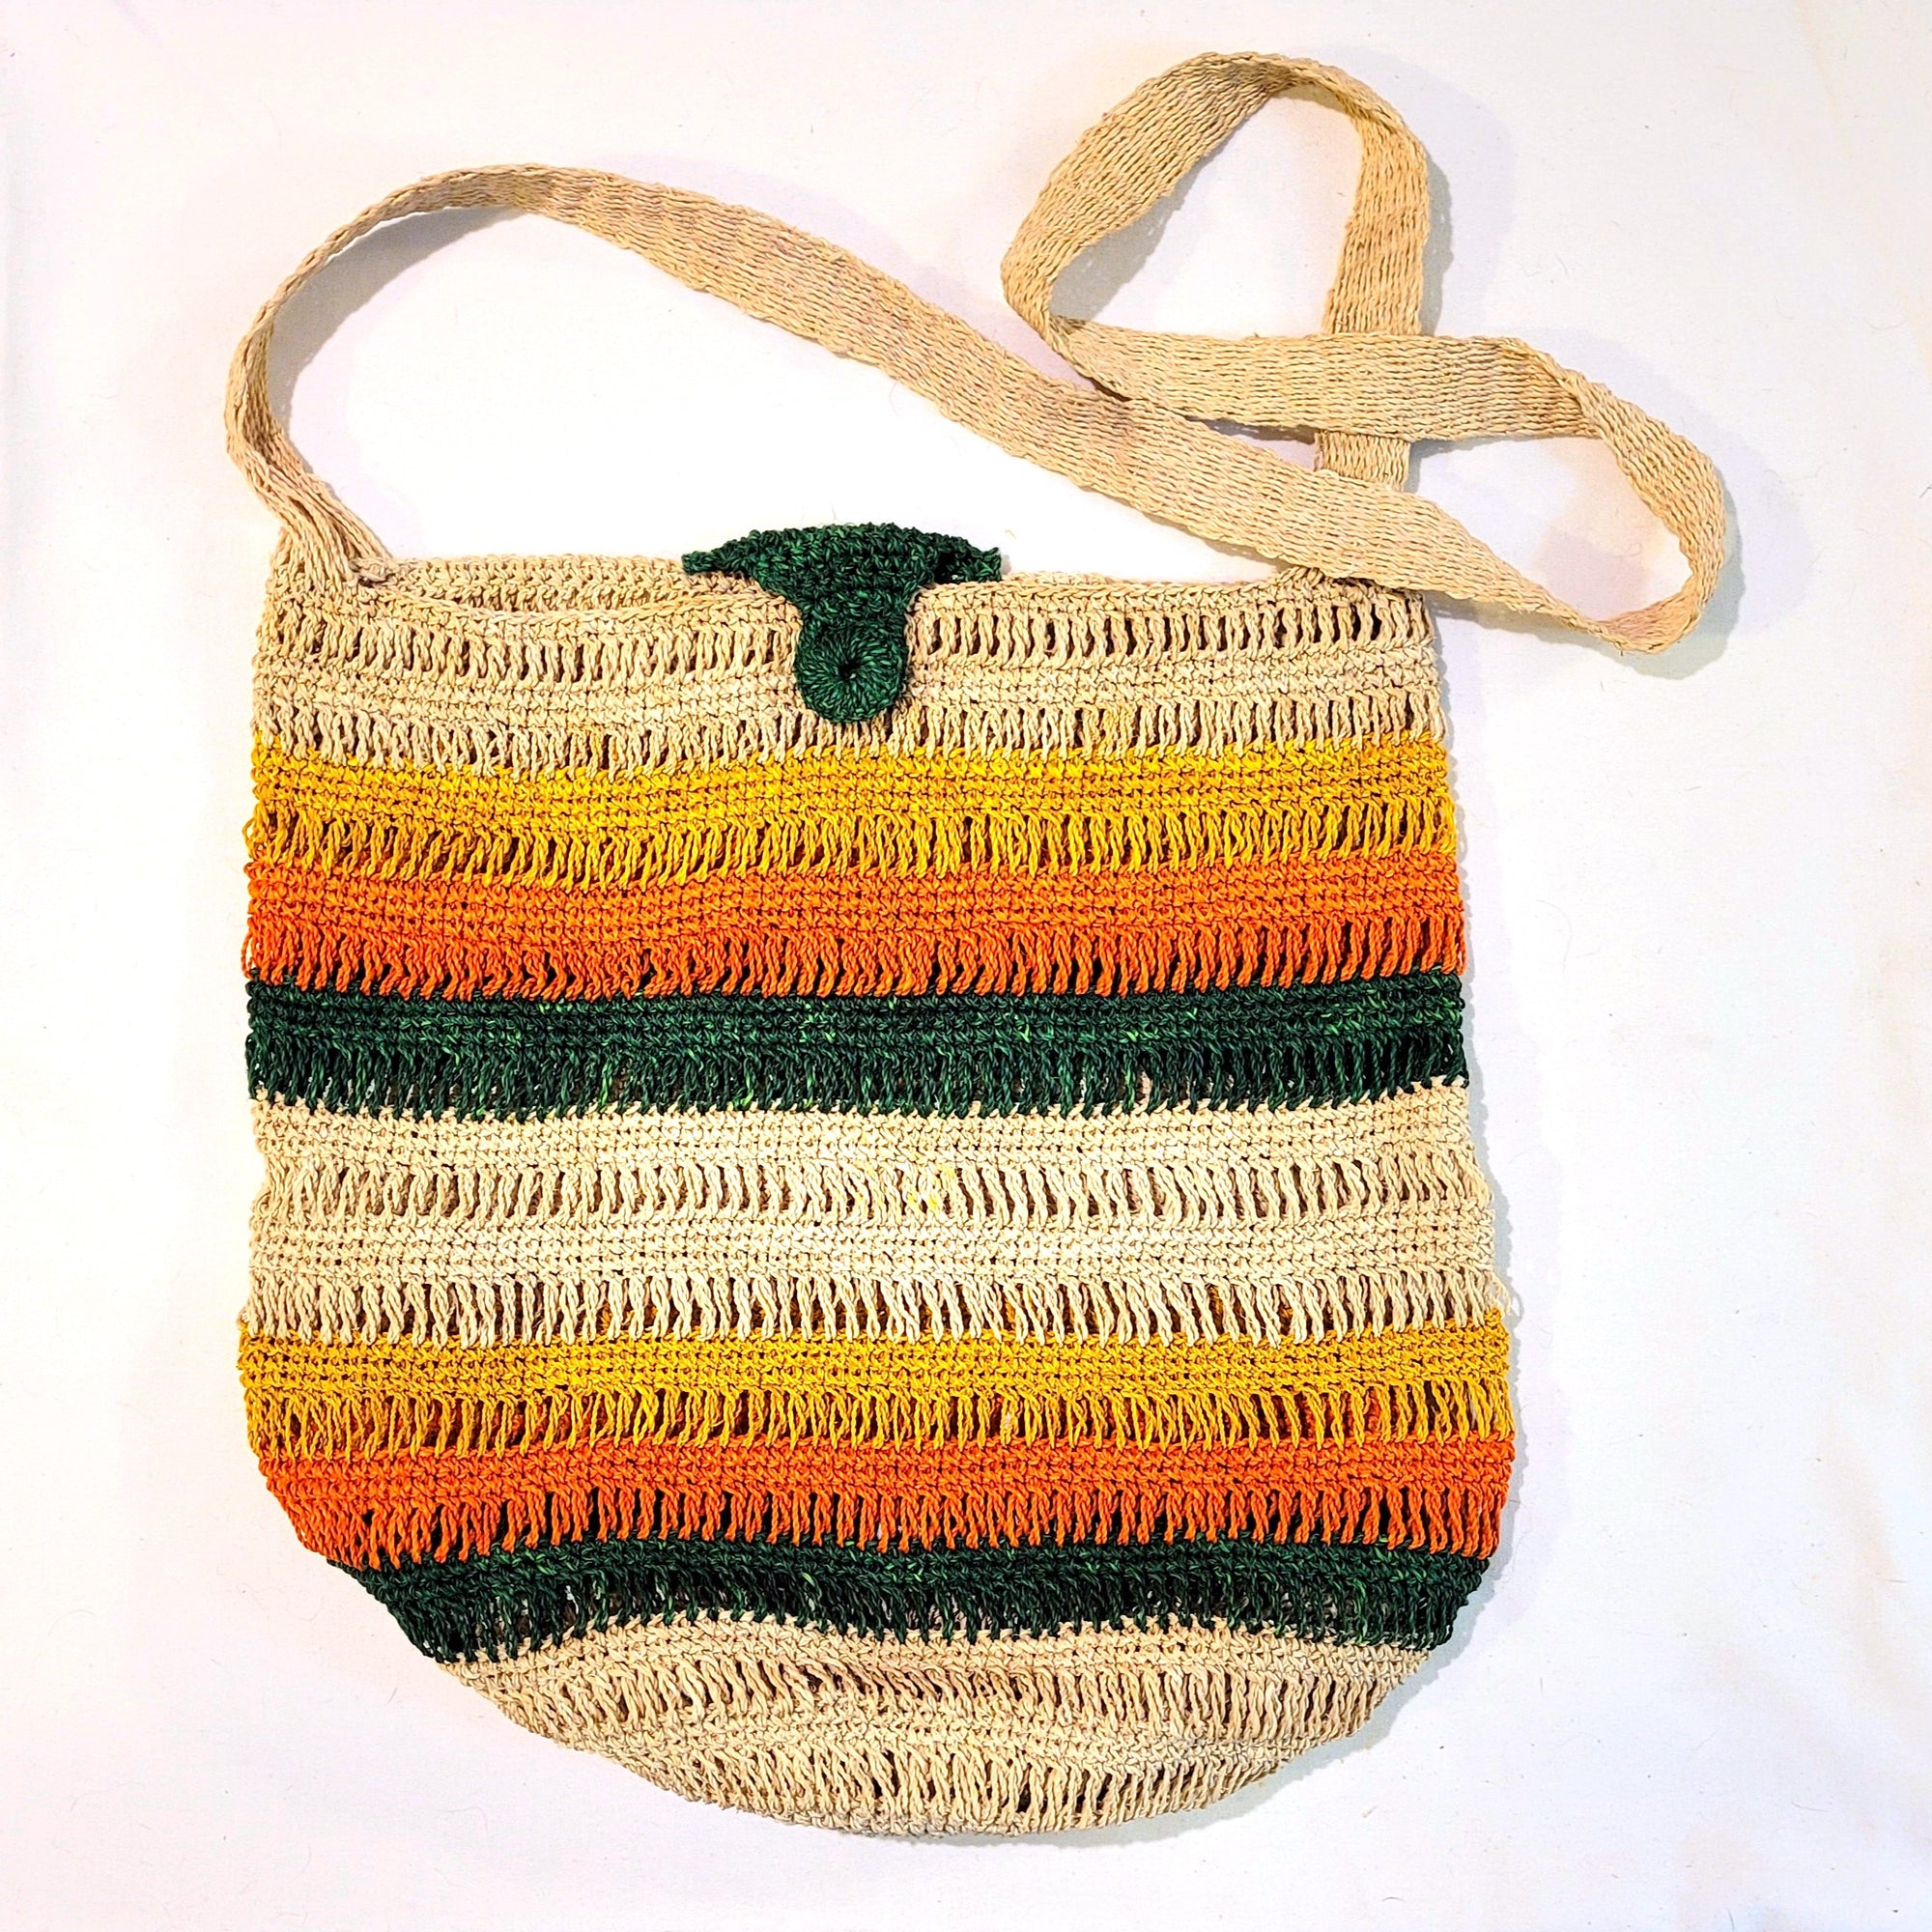 Hand made round bottom chambira fiber shoulder bag made by Peruvian Amazon artisan